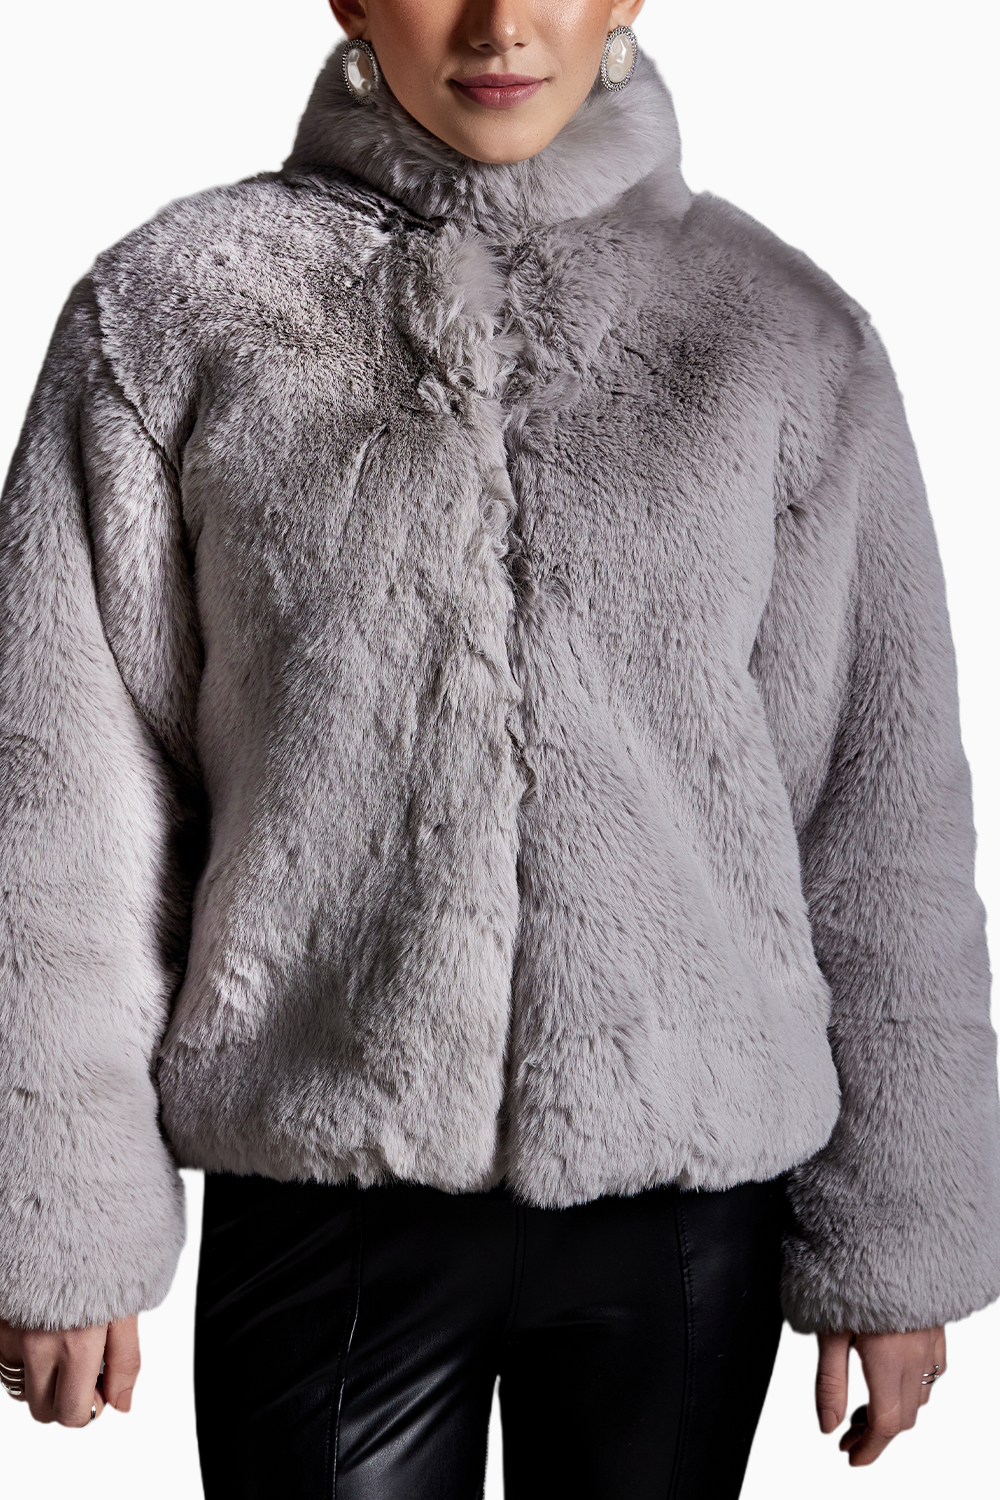 Stone Fur Jacket